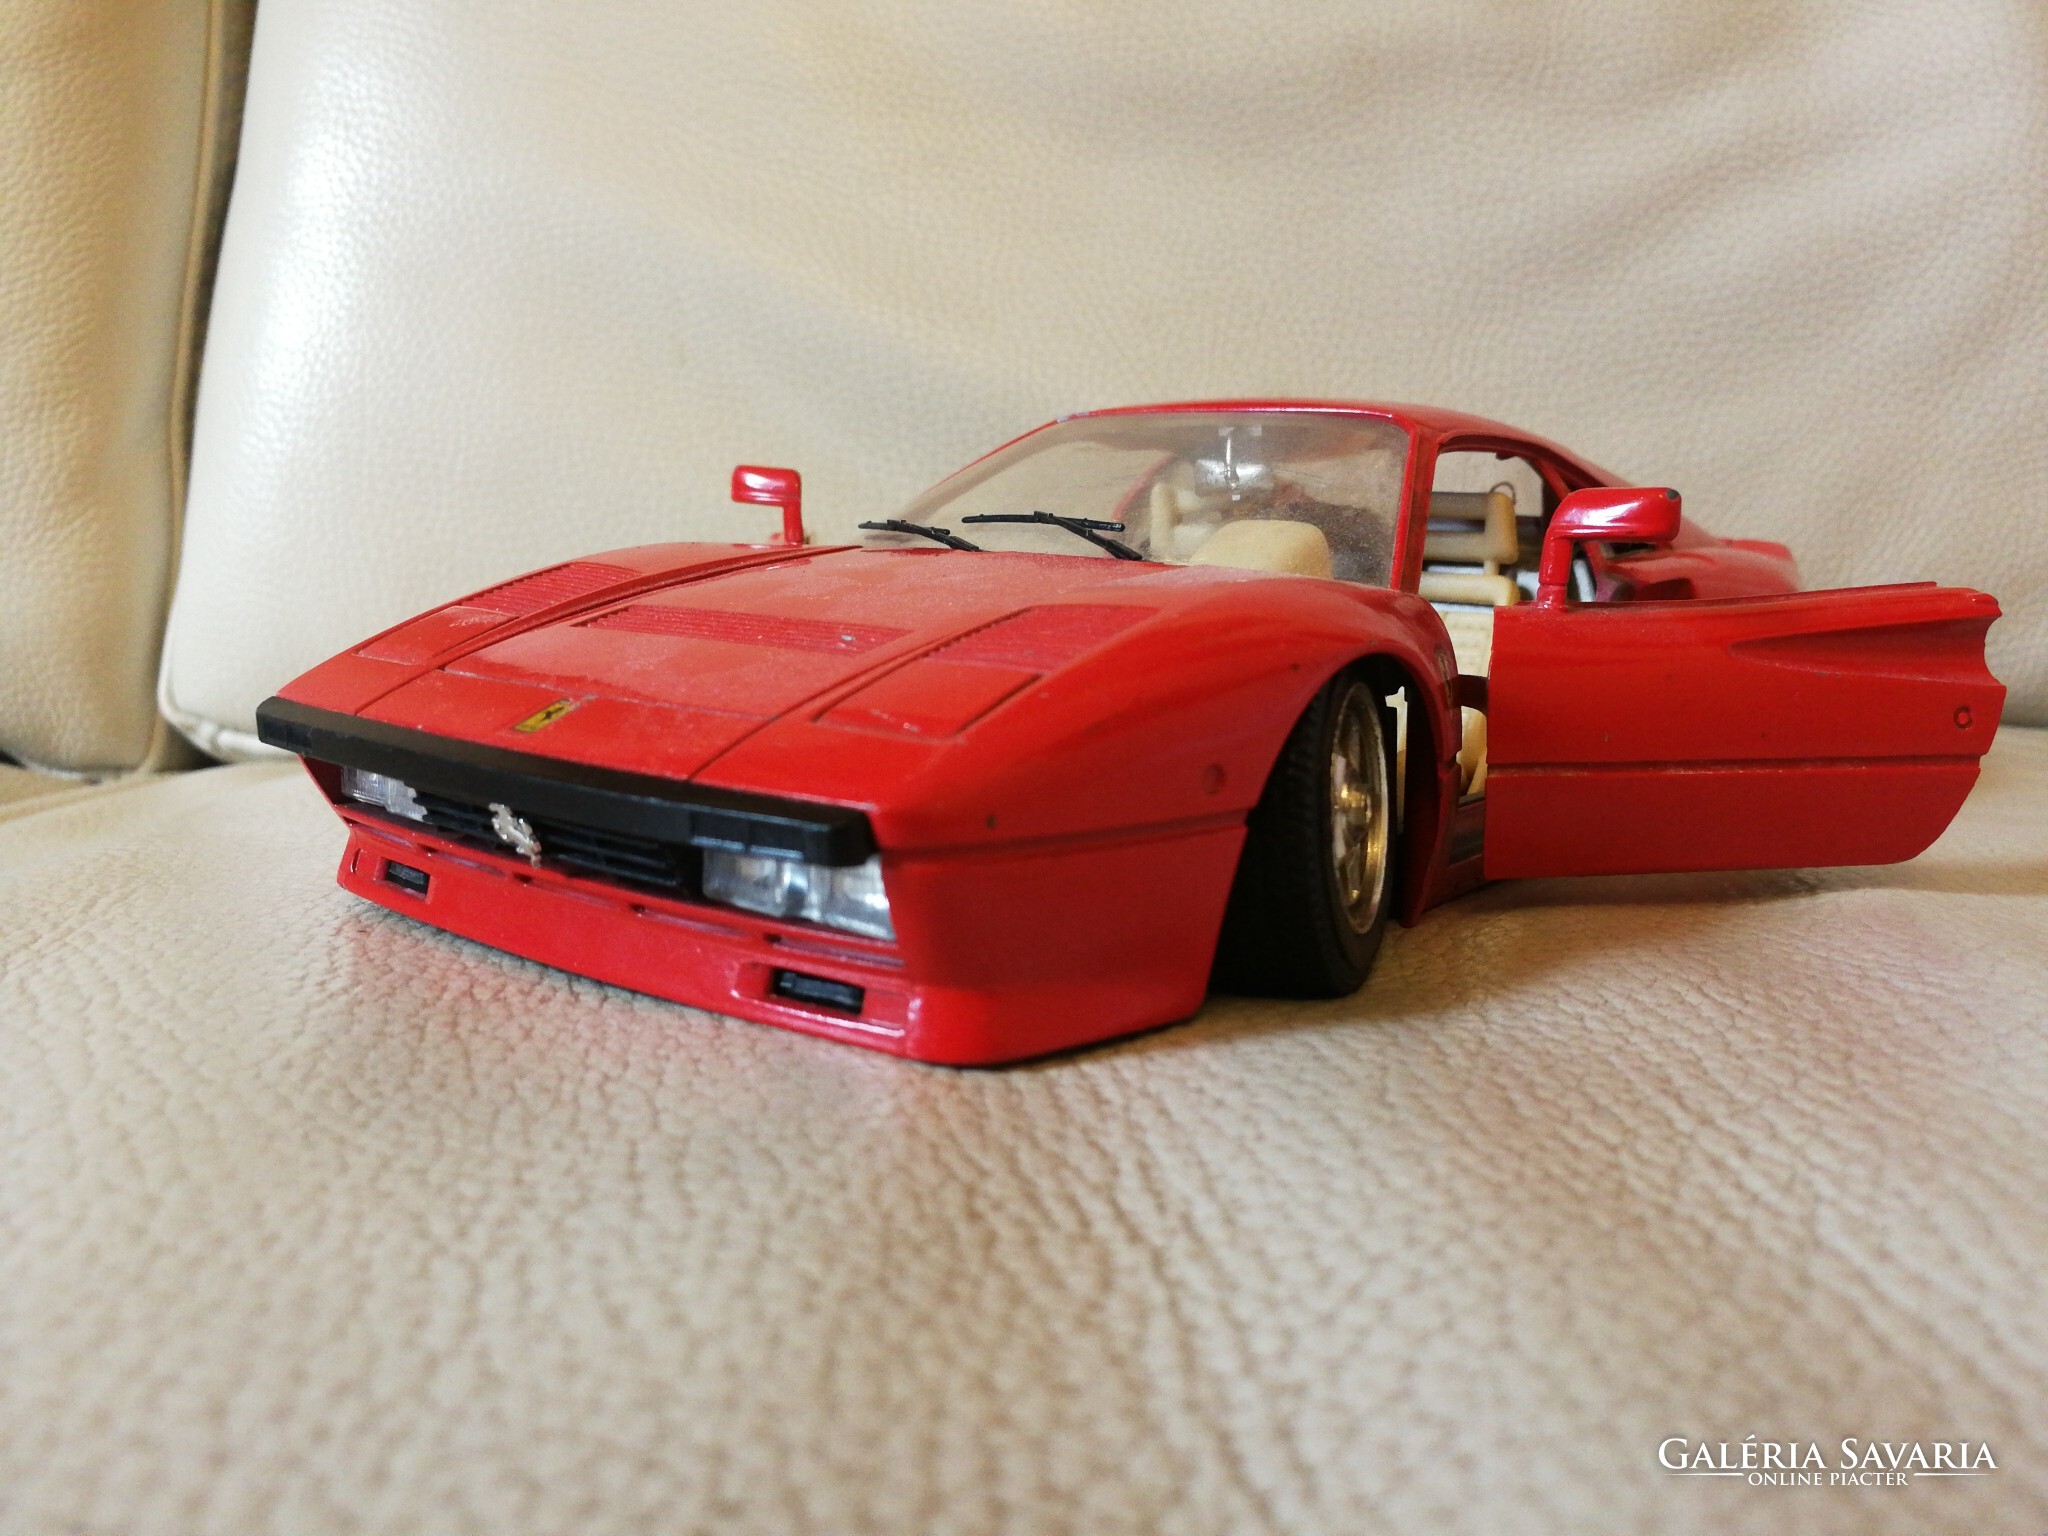 طيب الرائحة وسادة قبر  Ferrari Gto1984 es modell 1/18 modell, makett. Burago - Collectibles |  Galeria Savaria online marketplace - Antiques, artworks, home decor items  and collectibles